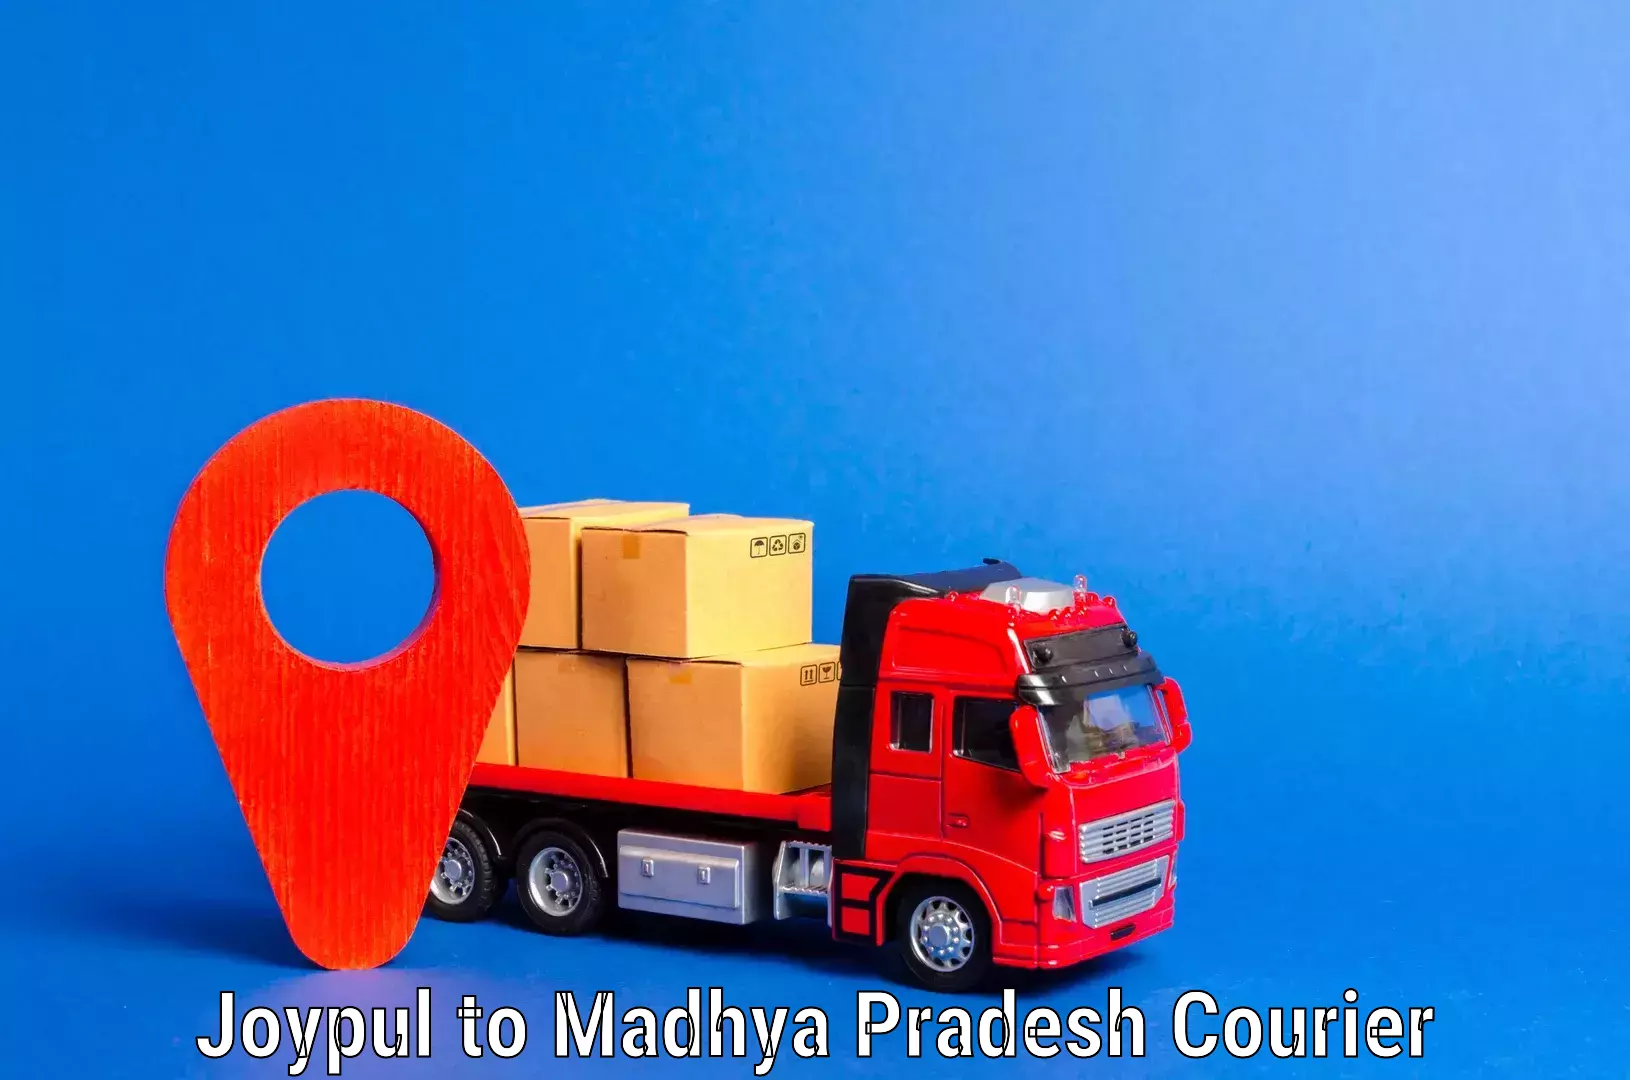 Moving and packing experts Joypul to Madhya Pradesh